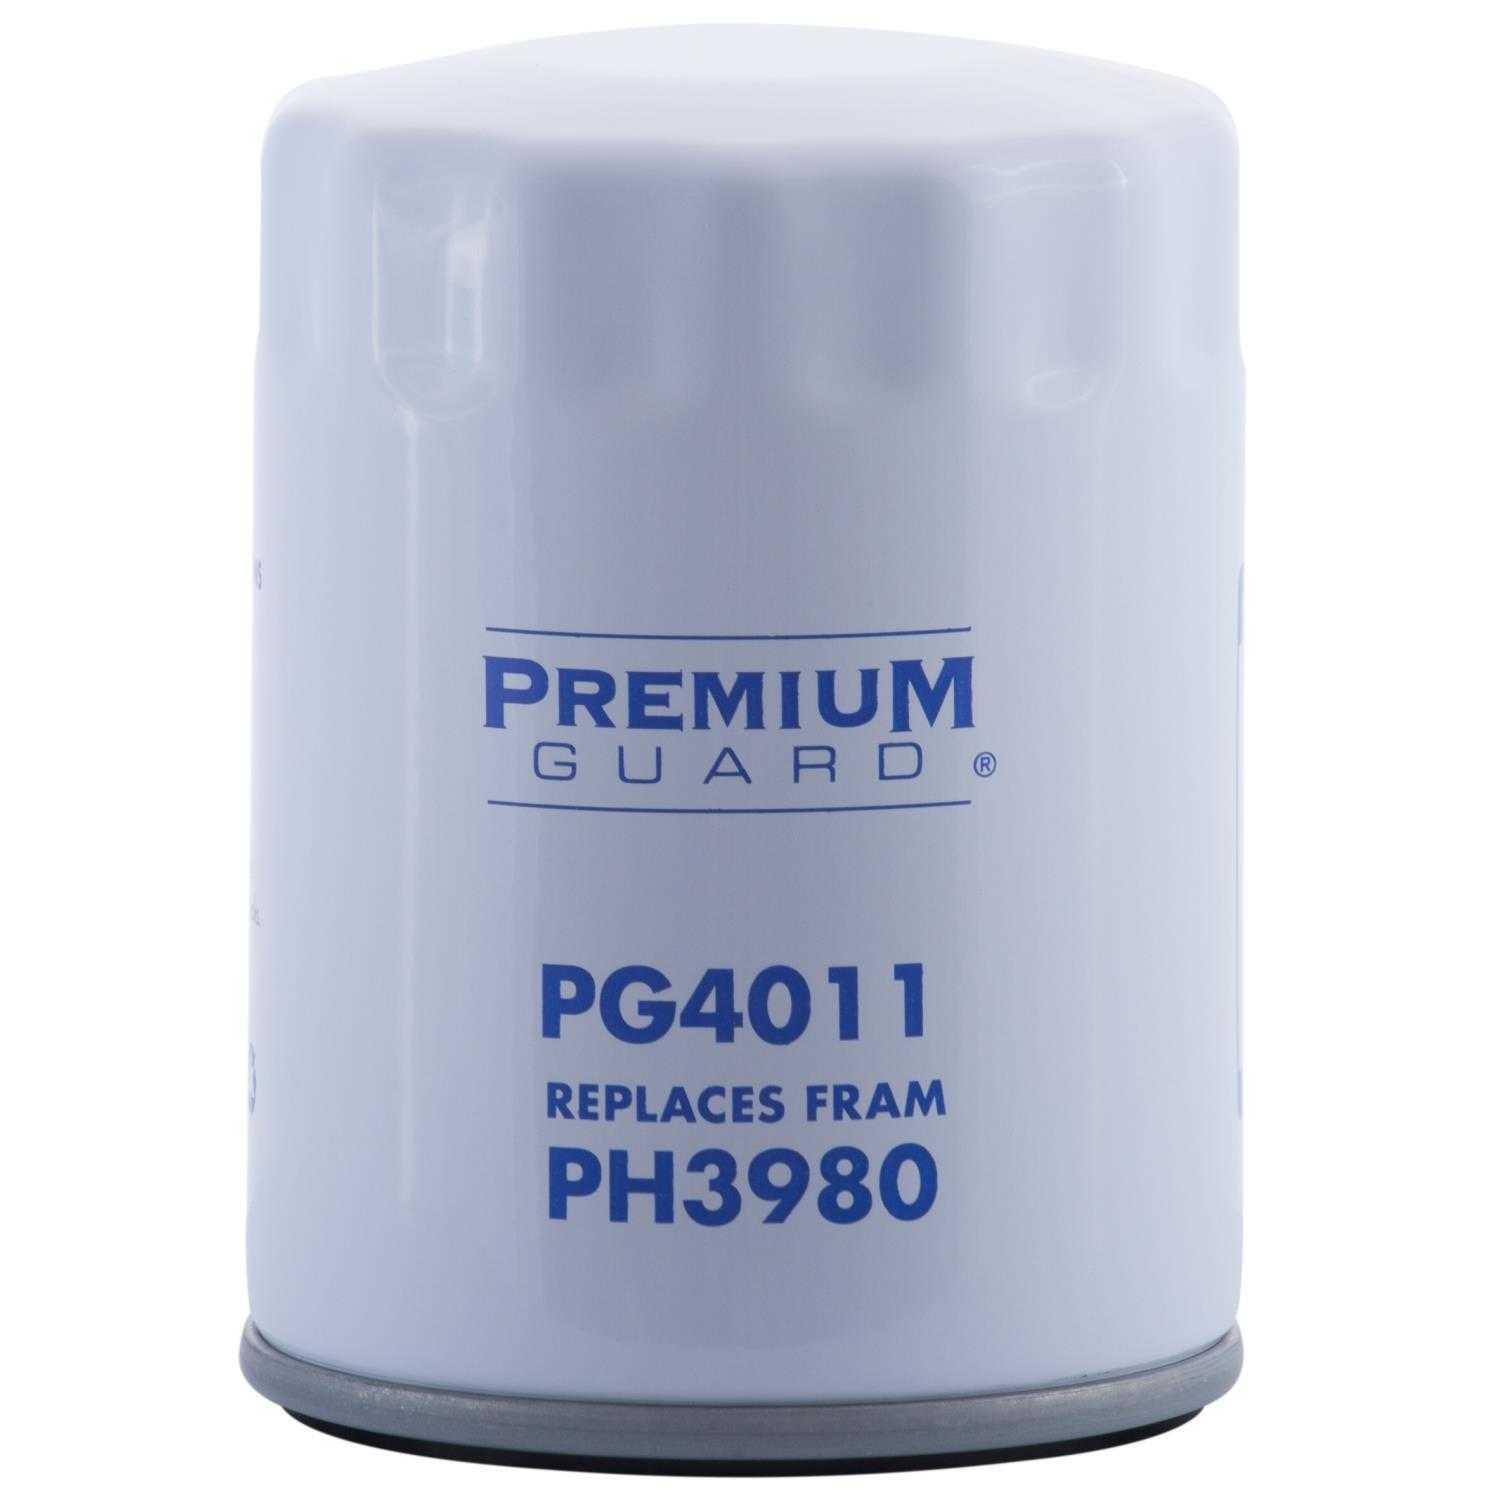 PREMIUM GUARD - Standard Life Oil Filter - PRG PG4011